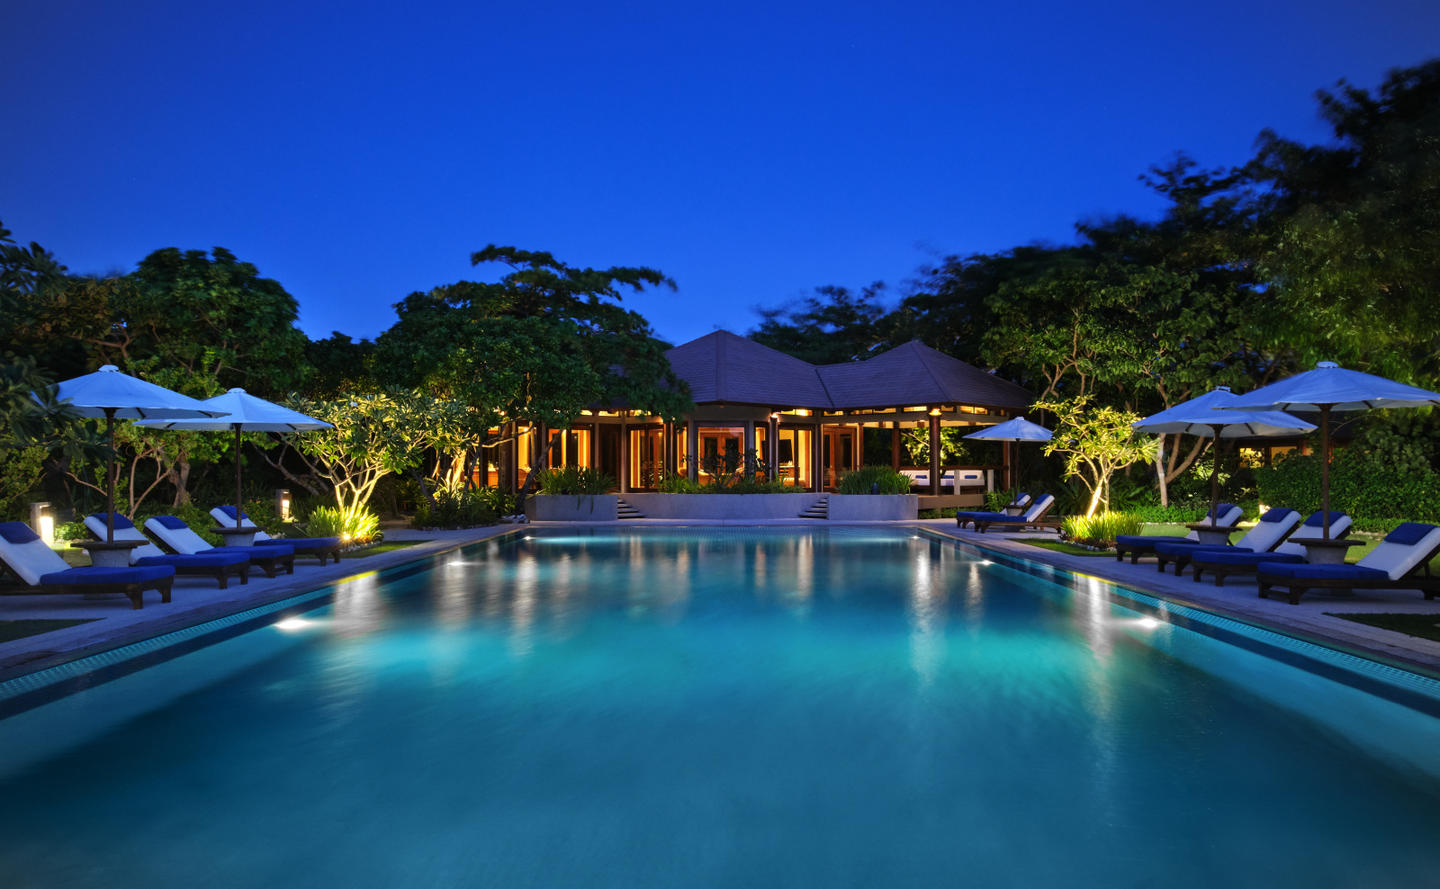 Amanpulo, Philippines - Four-Bedroom Villa Exterior Pool